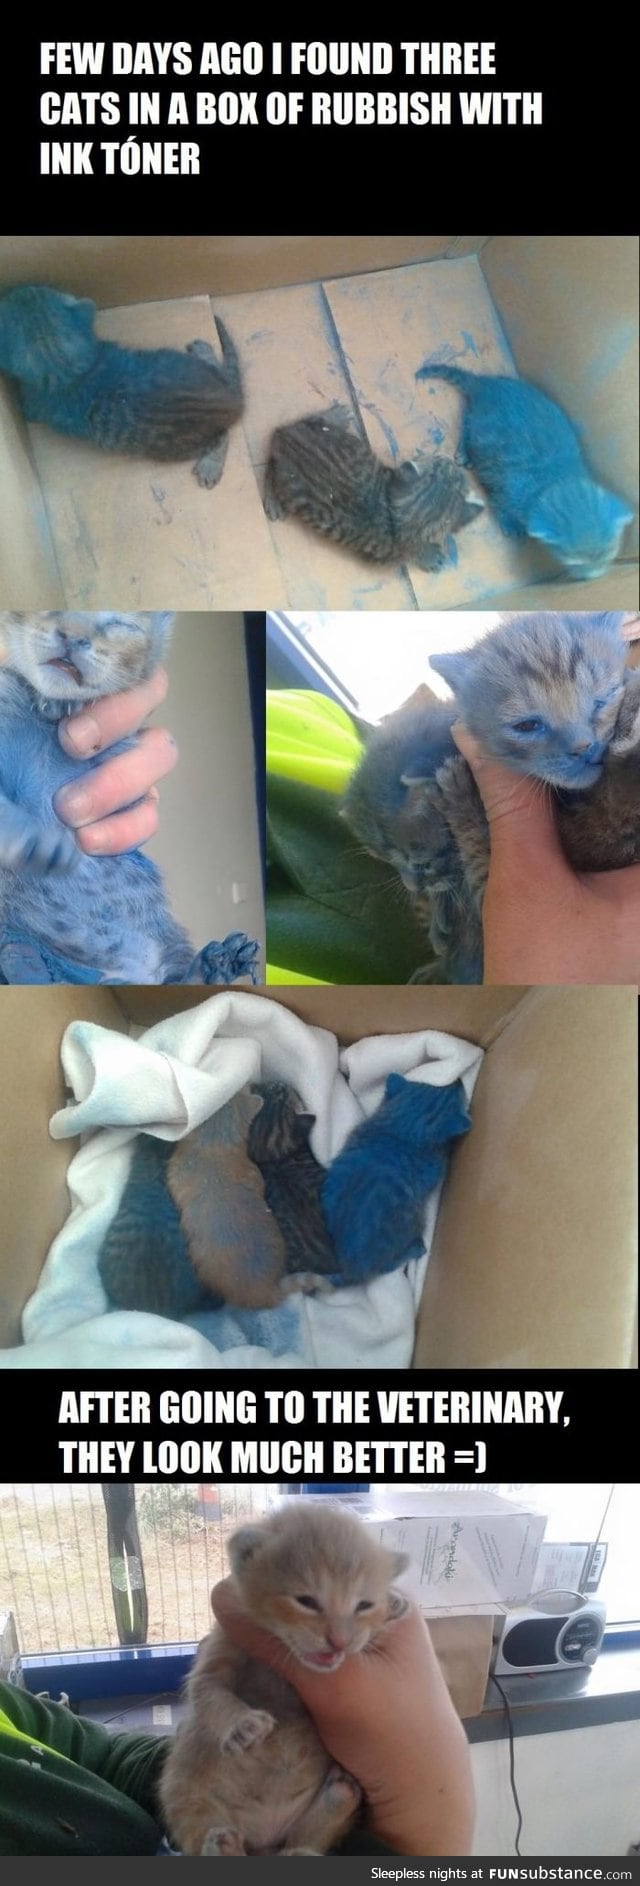 Saving 3 cute kittens